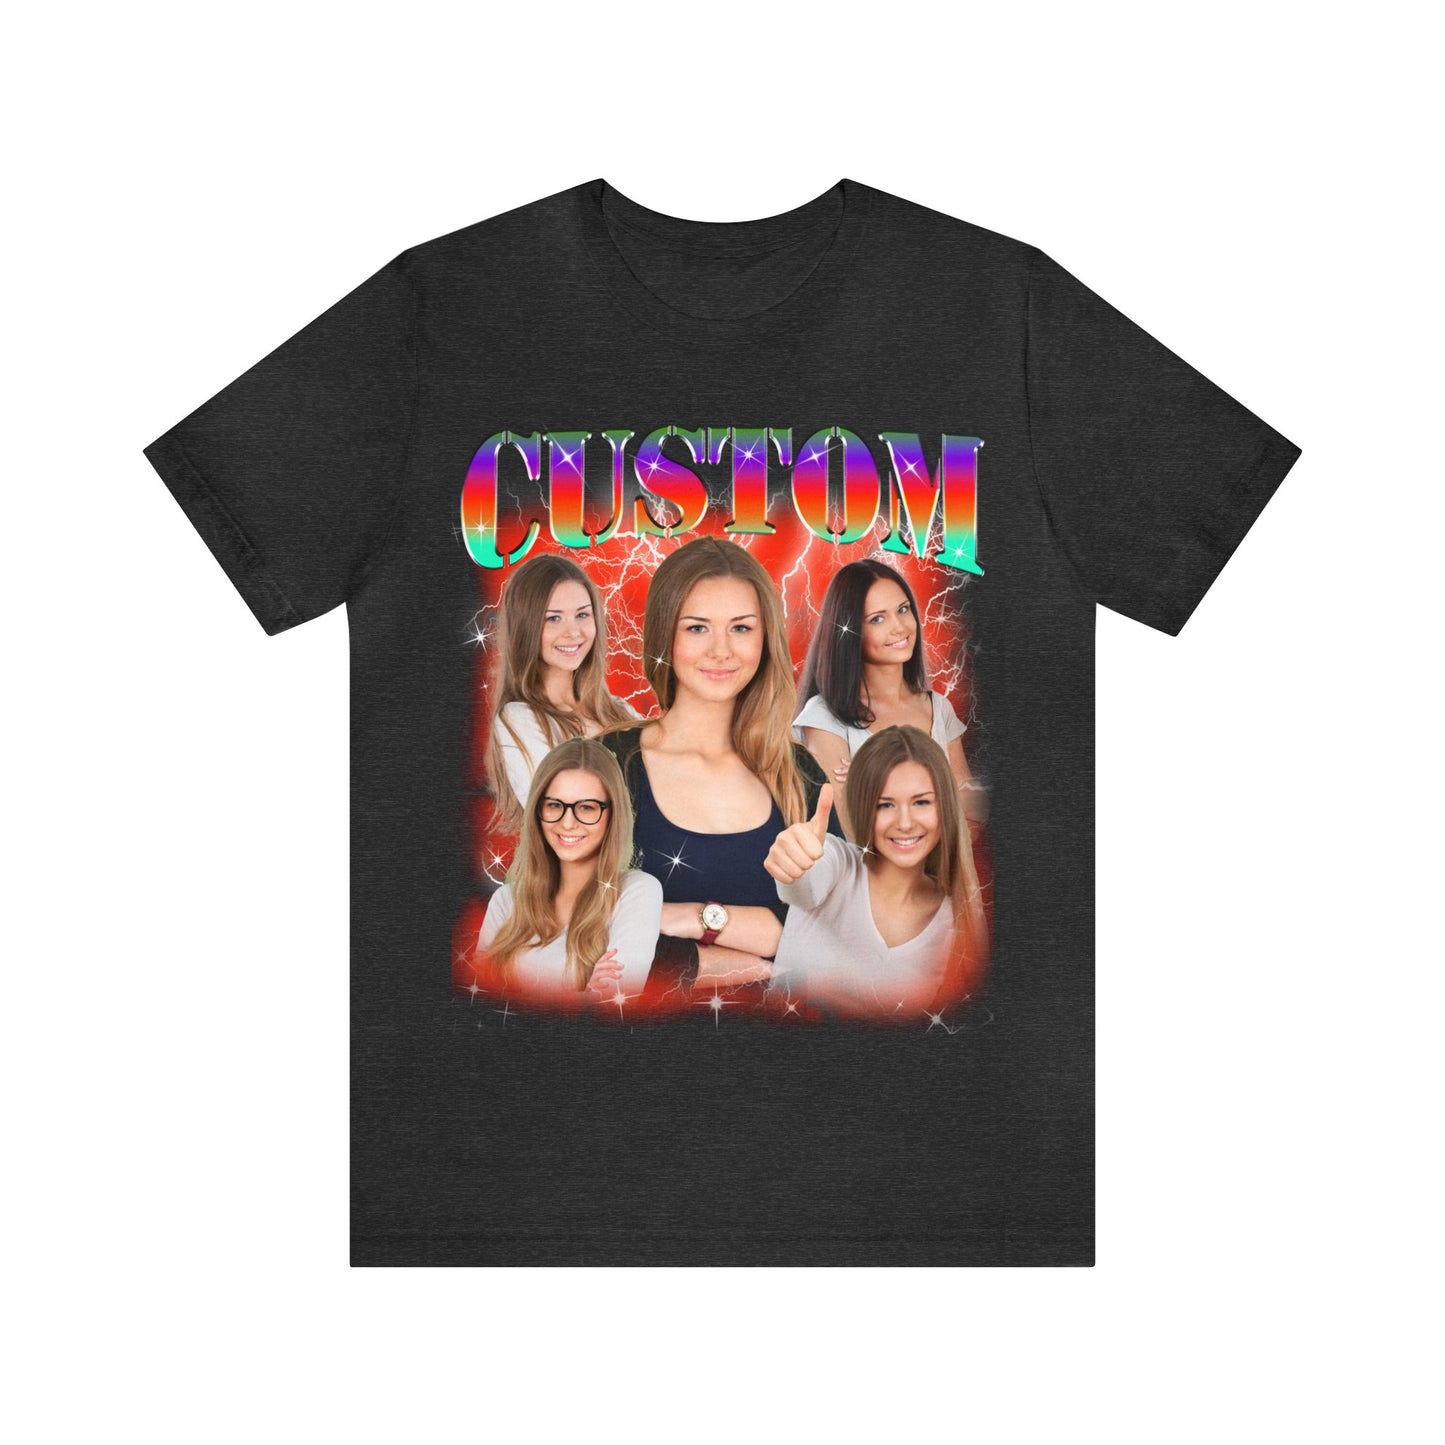 Custom Photo Bootleg Girlfriend Rainbow 90s Retro Vintage T-Shirt, Shirt with Face for Boyfriend Birthday Gift, Pictures Bootleg Tee, T1530